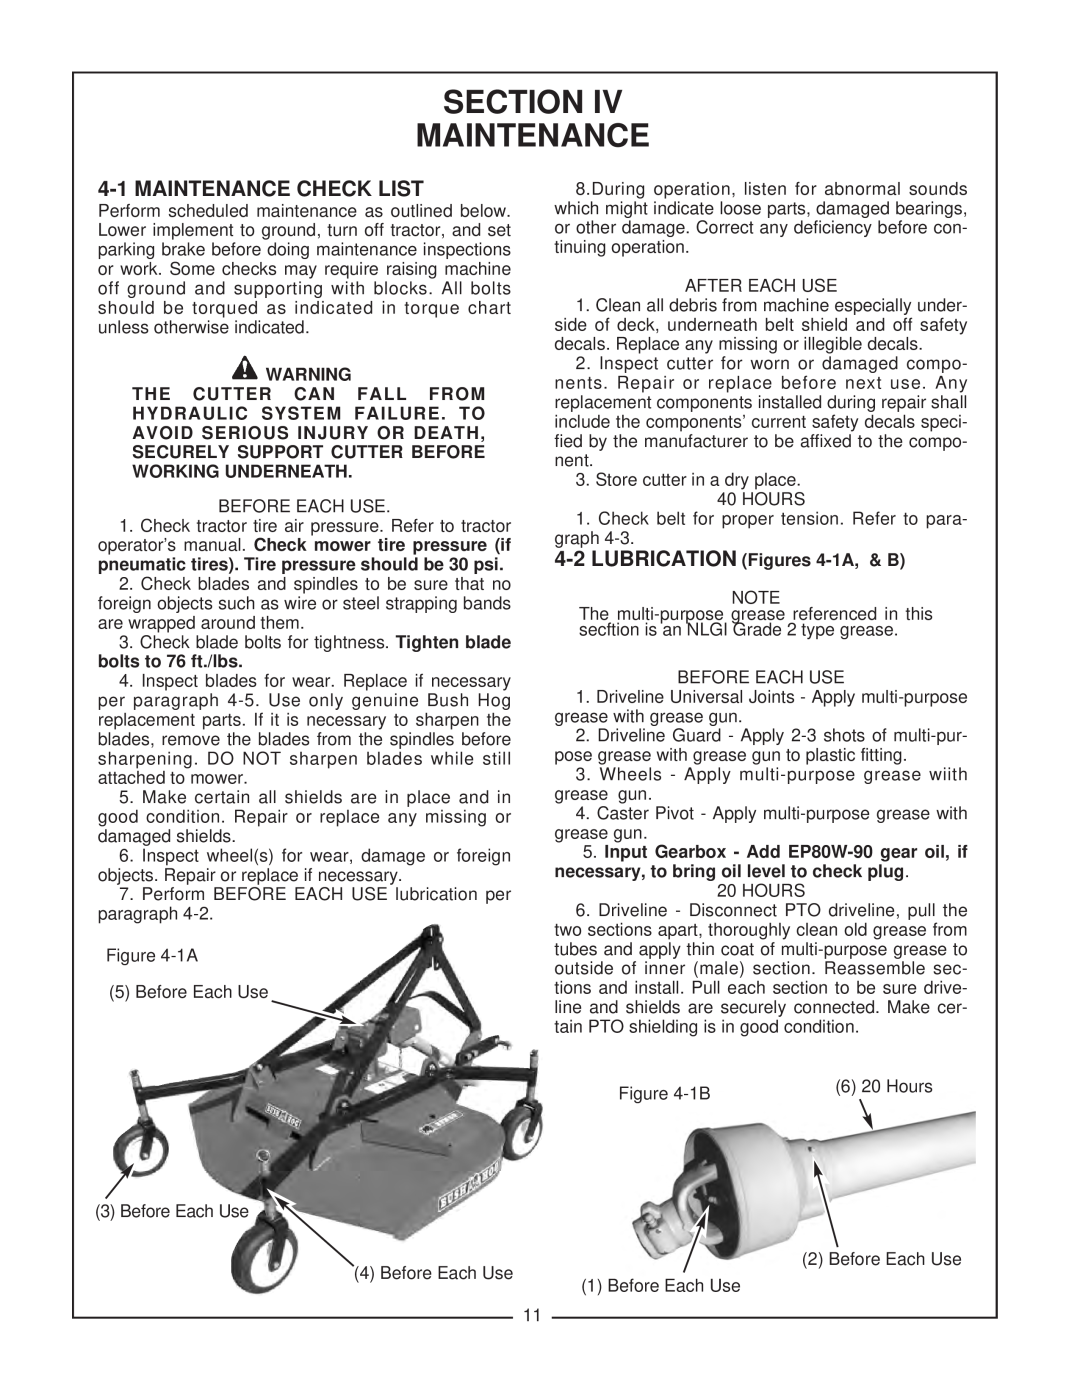 Bush Hog RFM 60 manual Section Maintenance, 4-1MAINTENANCE CHECK LIST, bolts to 76 ft./lbs, 4-2LUBRICATION Figures 4-1A,& B 